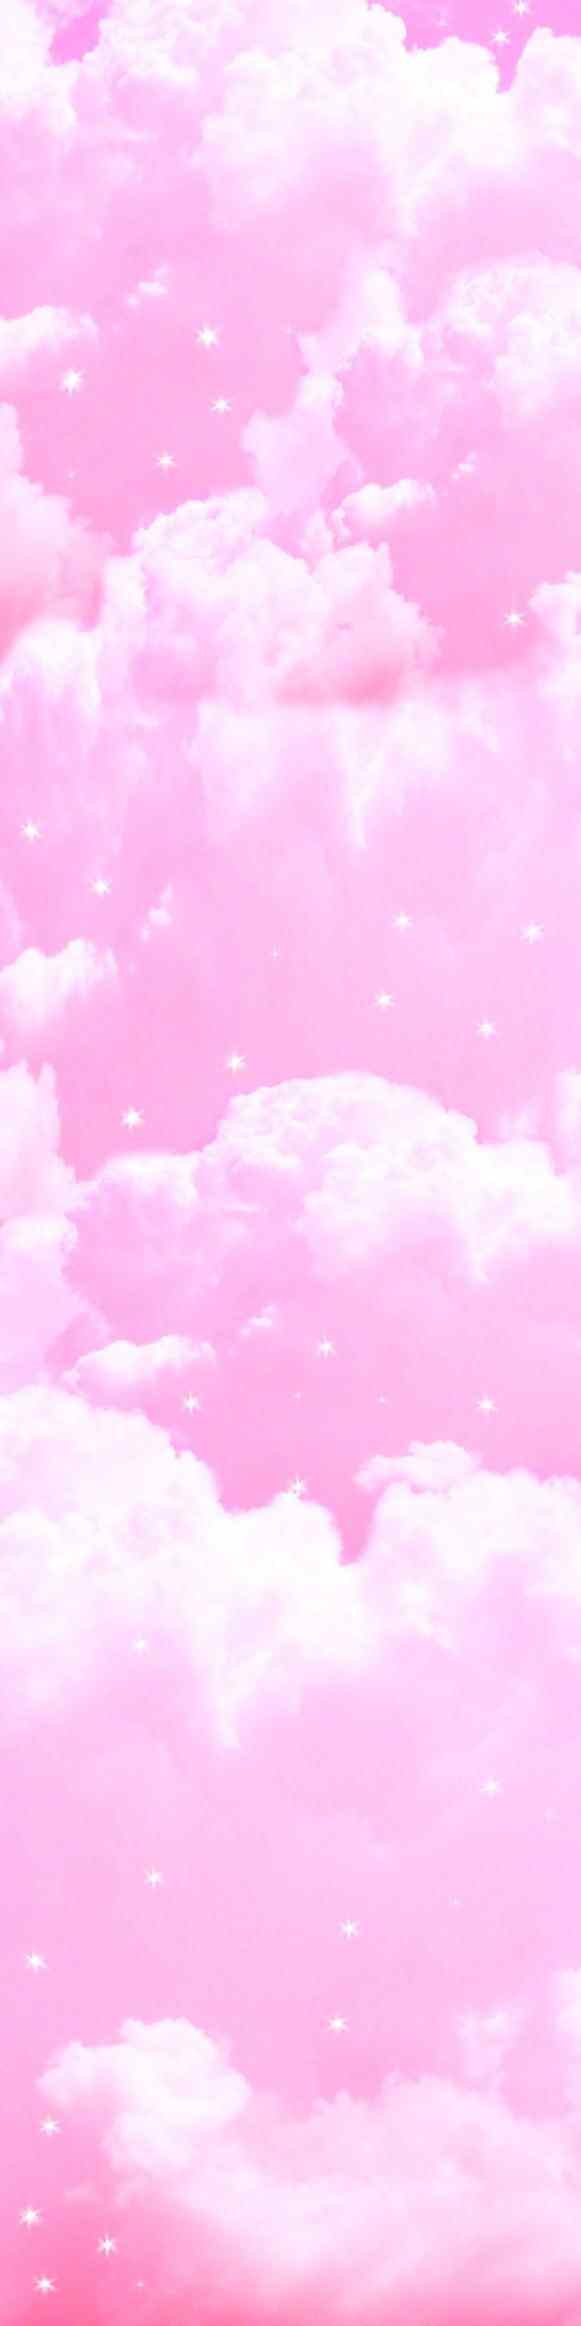 Pastel Pink Tumblr Iphone Wallpapers Top Free Pastel Pink Tumblr Iphone Backgrounds Wallpaperaccess